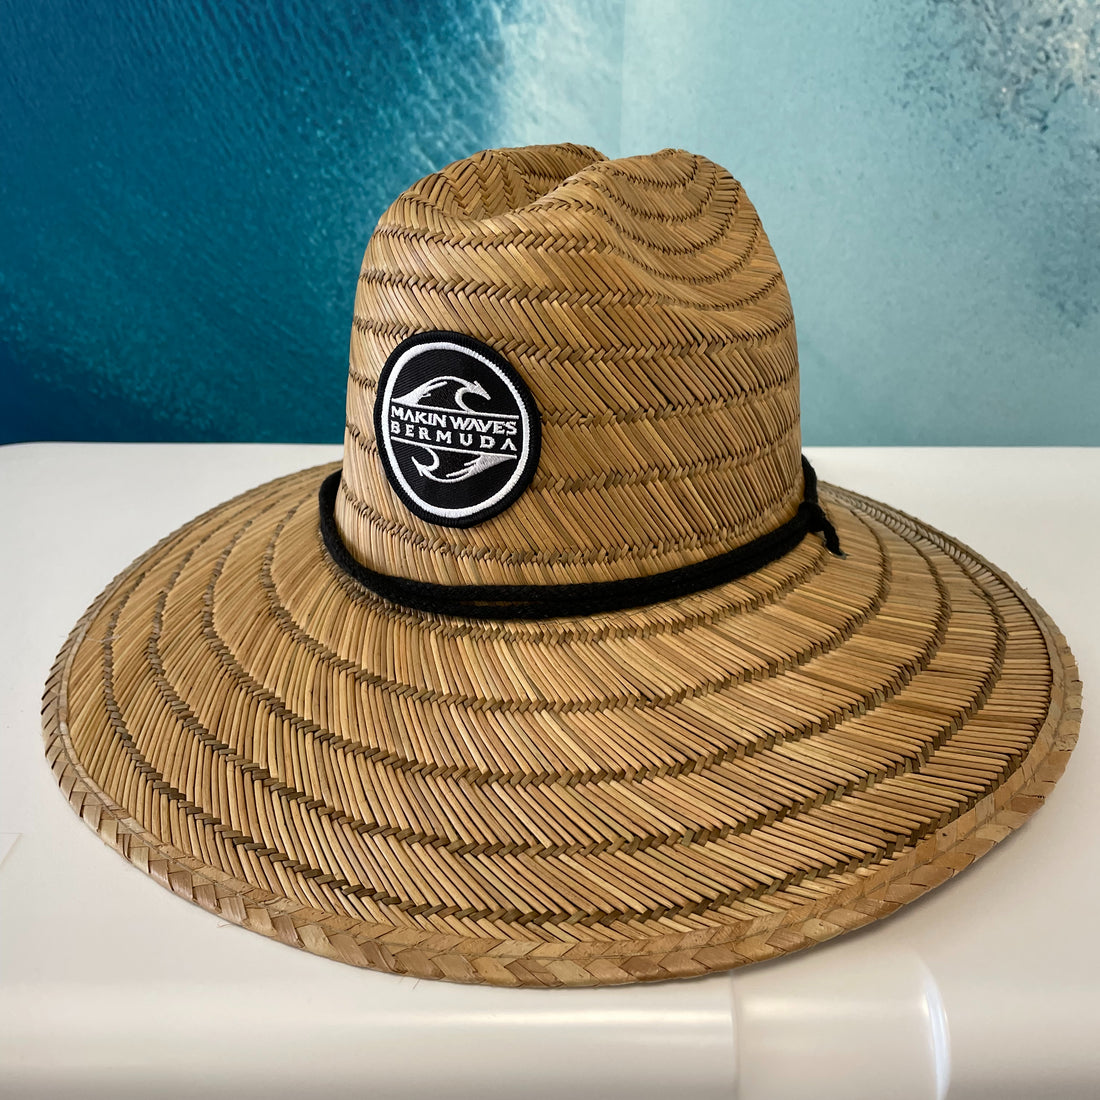 Straw Hat - Makin Waves Identity Lifeguard Hat